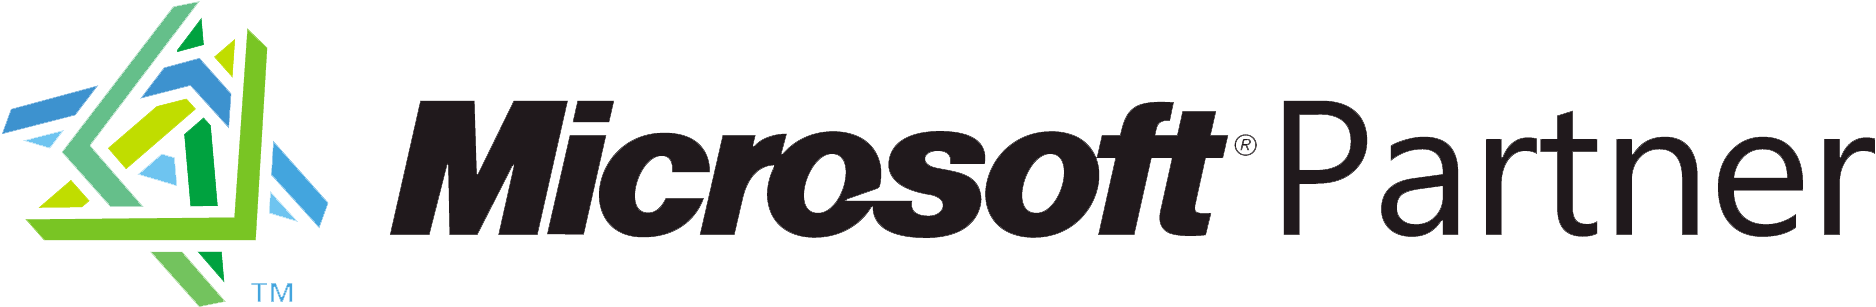 Recognitions - Microsoft Partner Logo (1984x496)